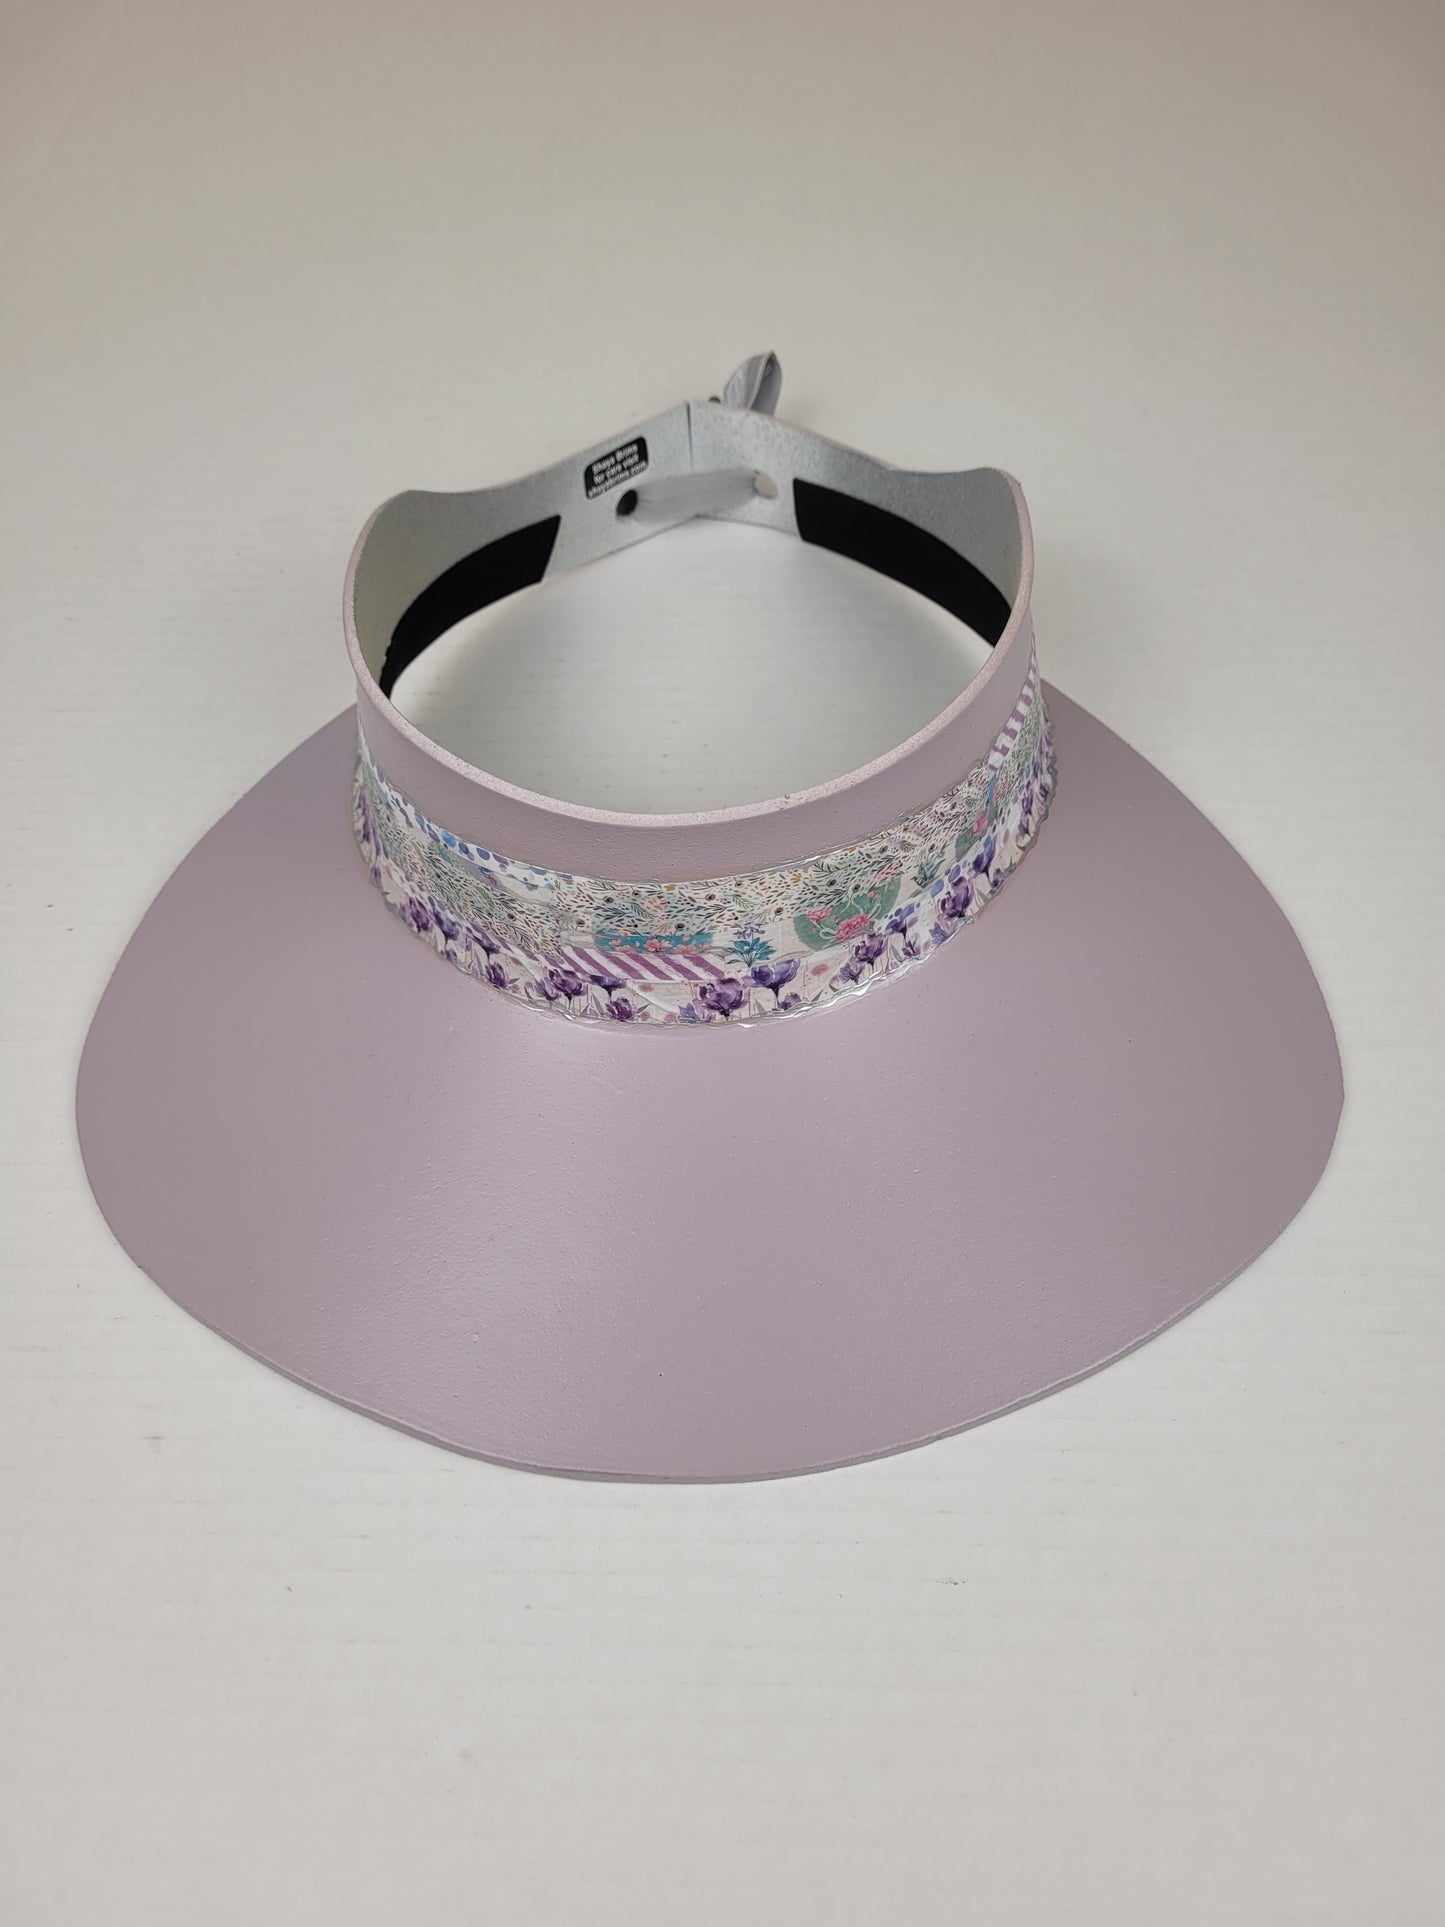 Audrey Wide Brim Visor Hat - Lovely Lilac with Beige Bottom